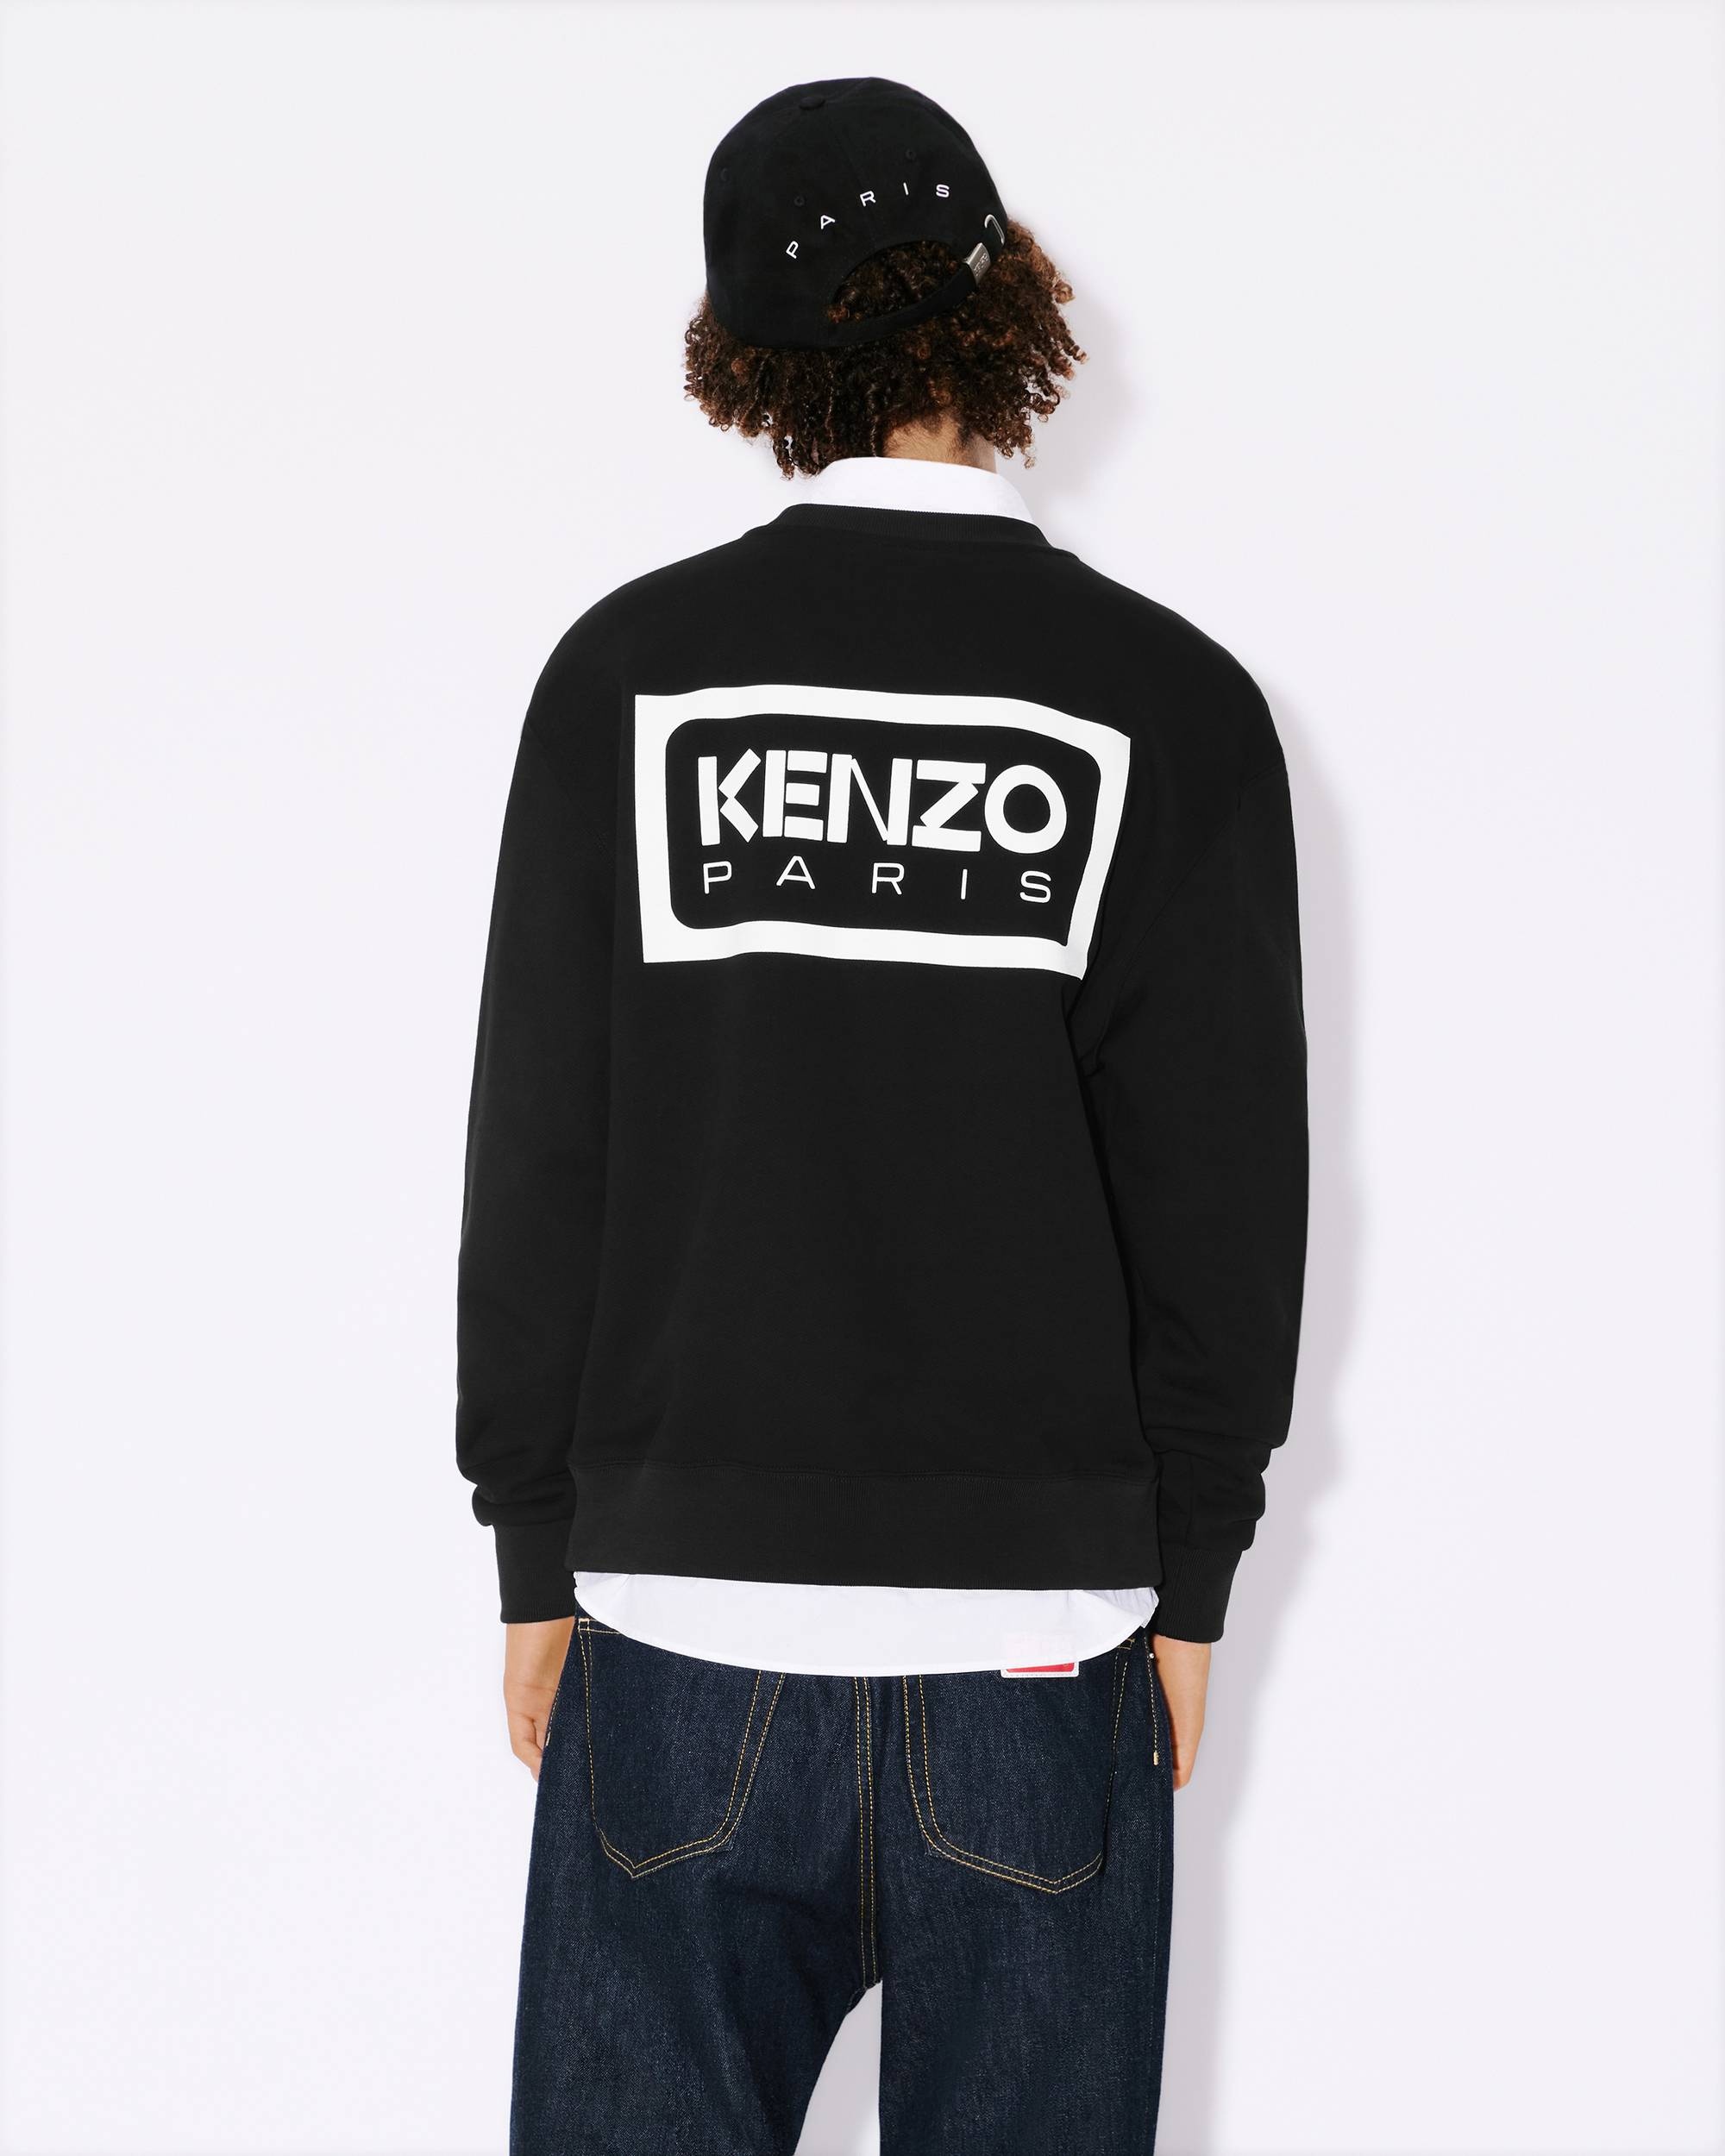 'Bicolor KENZO Paris' classic embroidered sweatshirt - 4